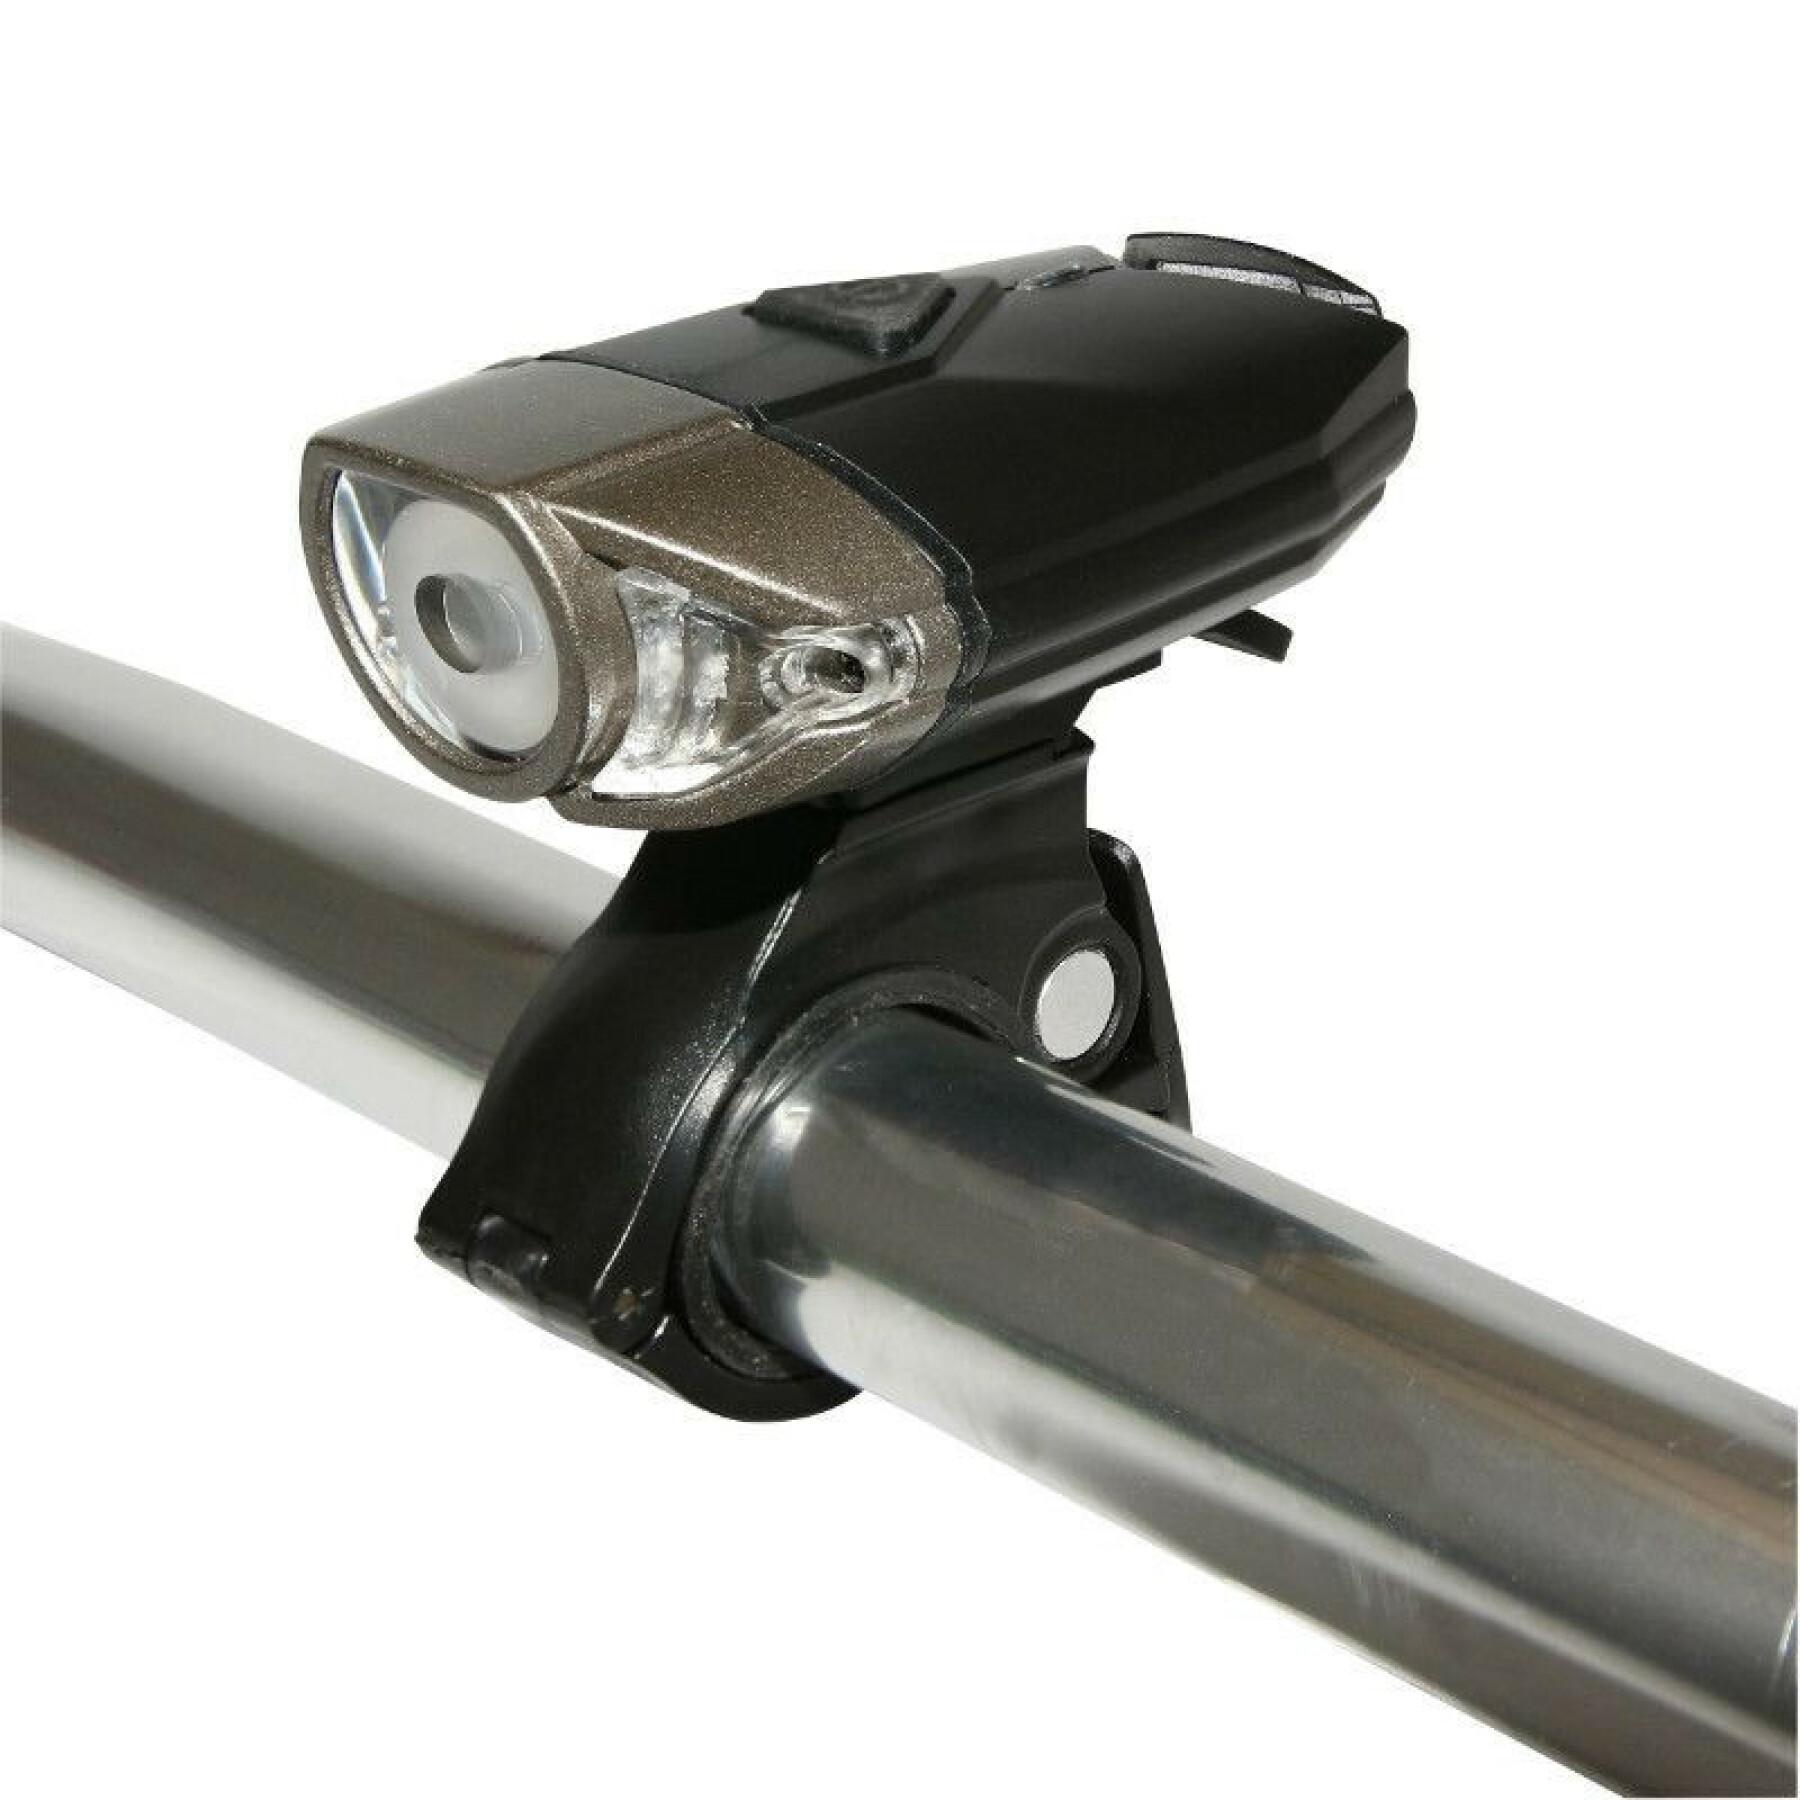 usb front light on handlebars 2 intensities 100%-50% handlebars or helmet fixation P2R 300 Lumens